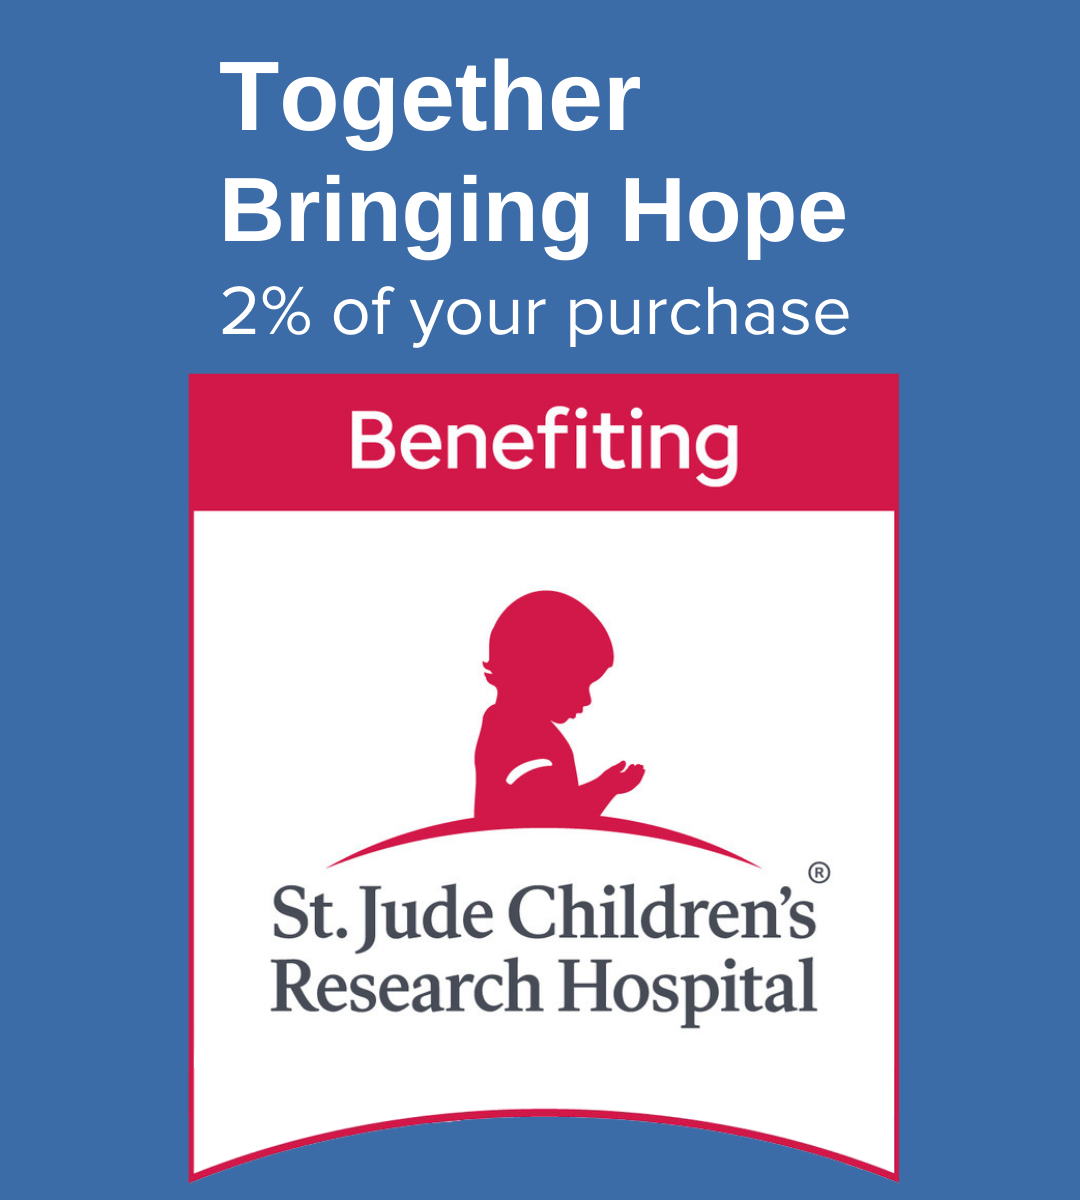 St. Jude Children's Hospital Partnership